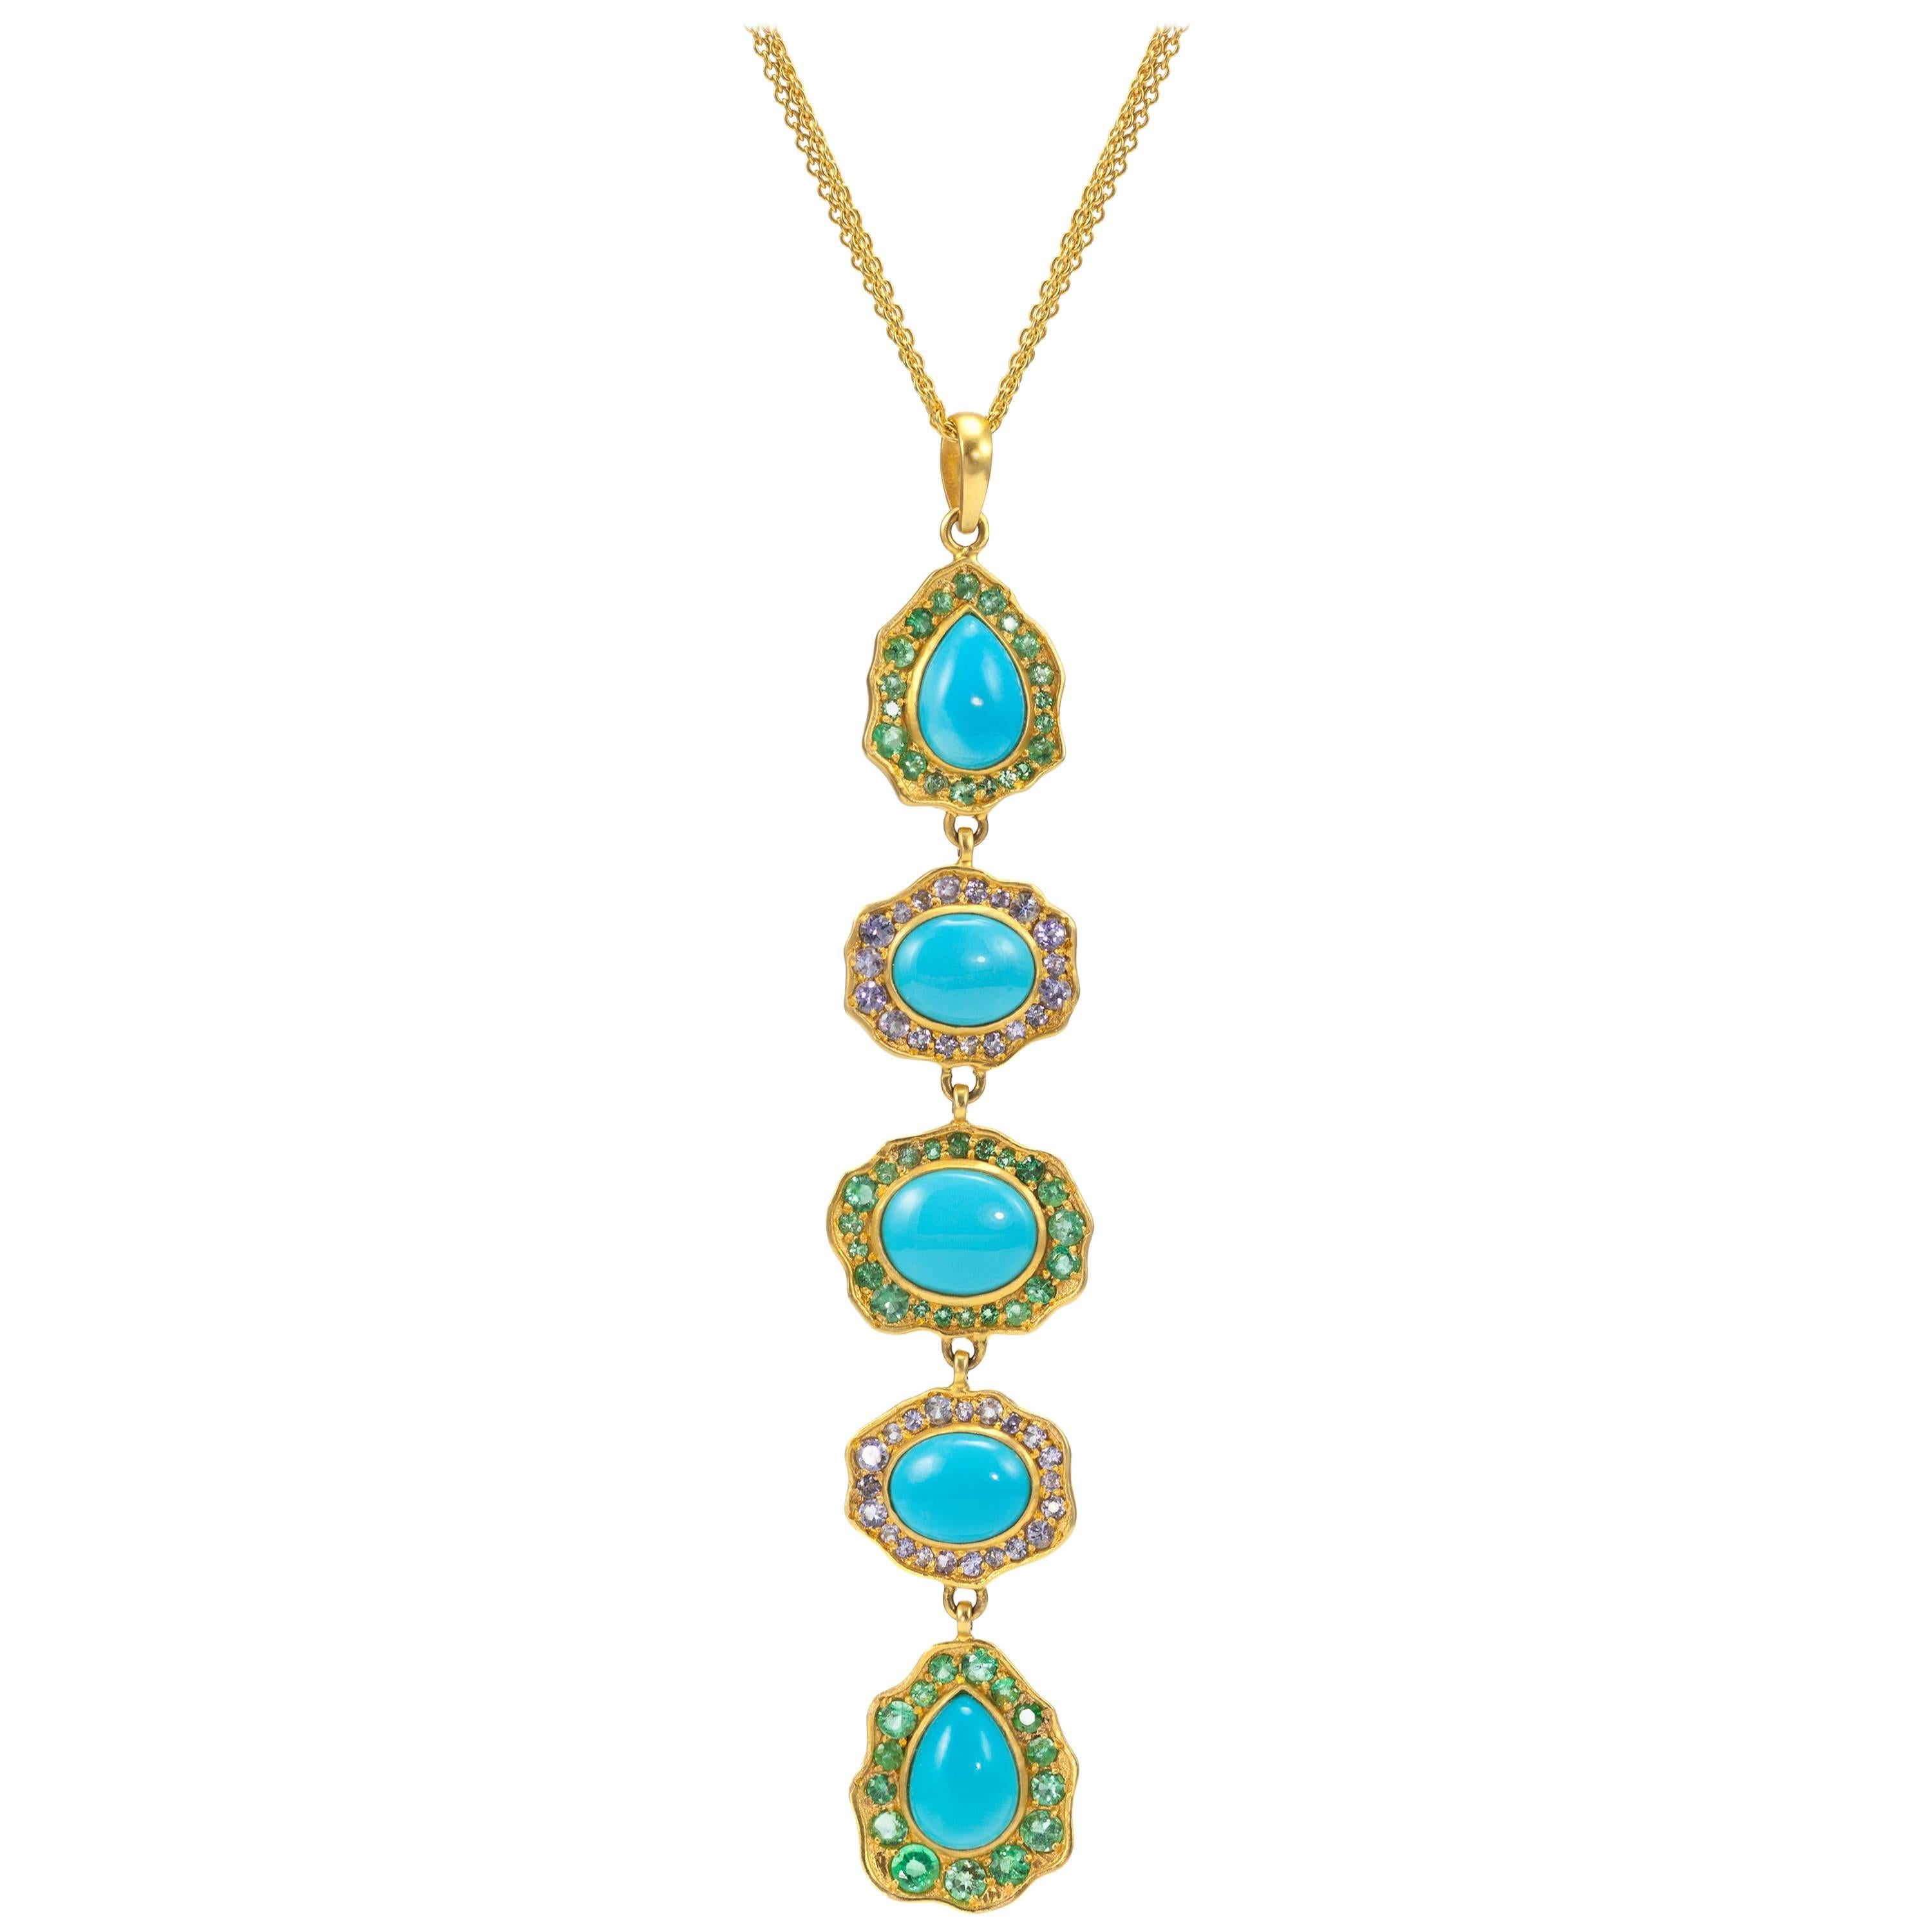 Lauren Harper Turquoise, Emerald, Tanzanite, Gold Drop Pendant Necklace